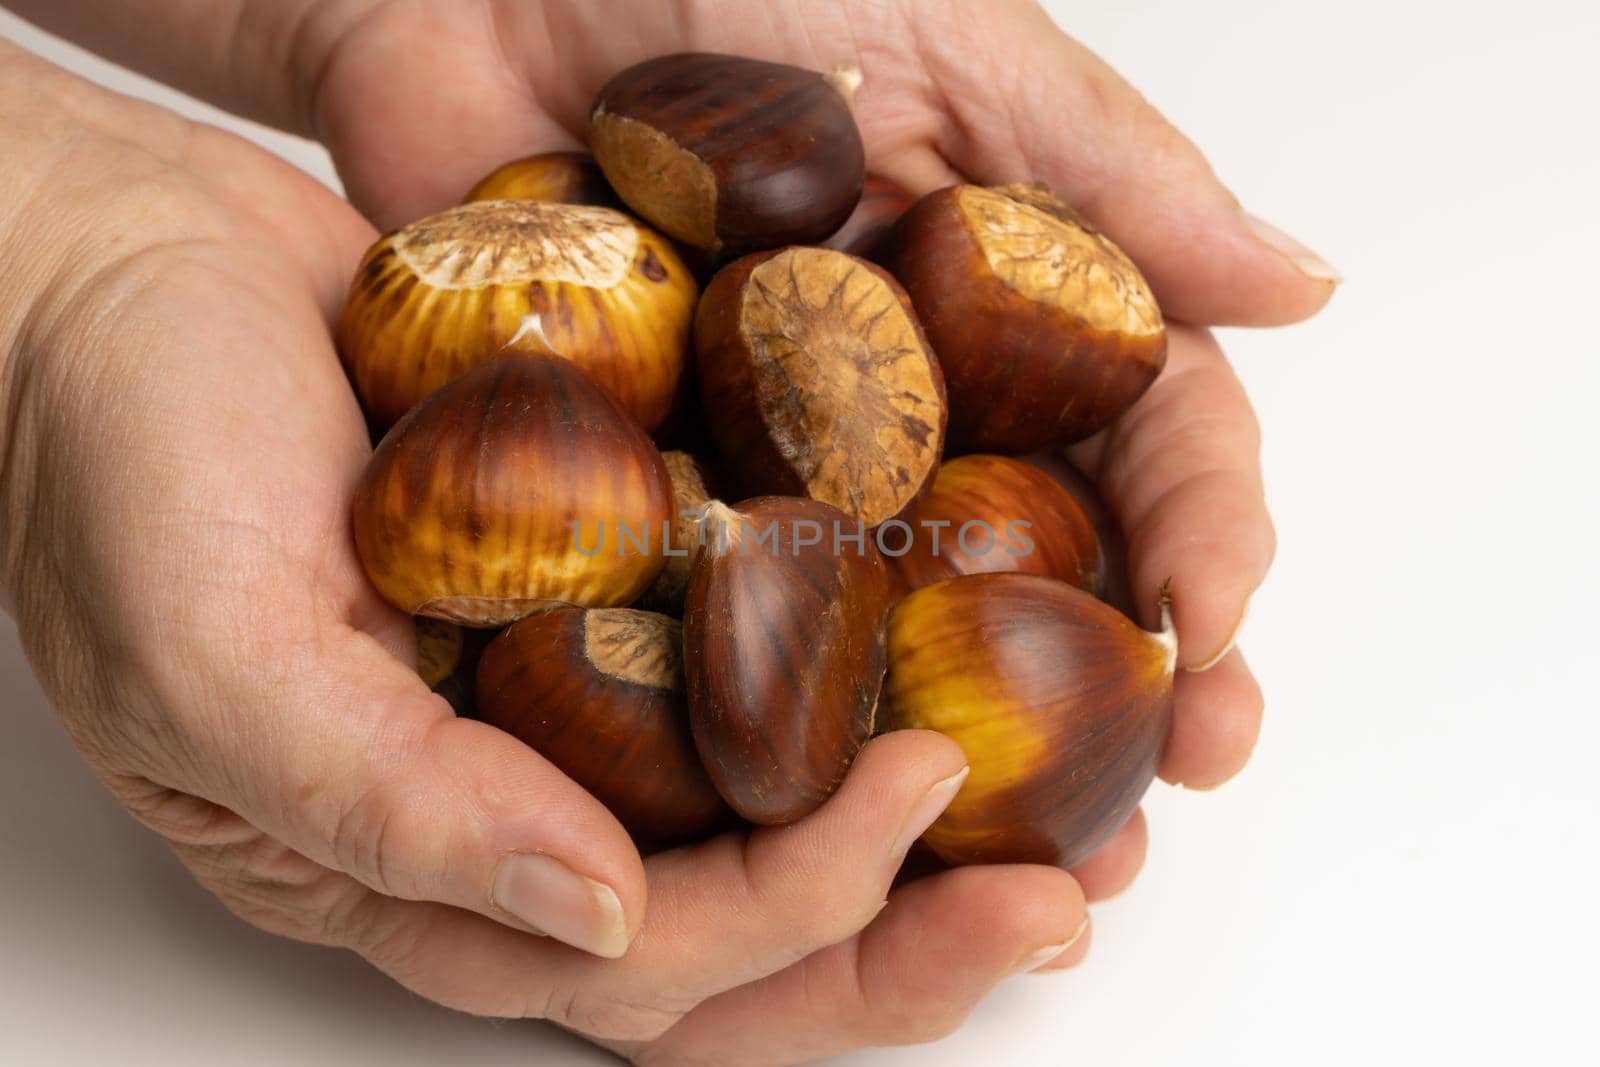 seasonal chestnuts by joseantona